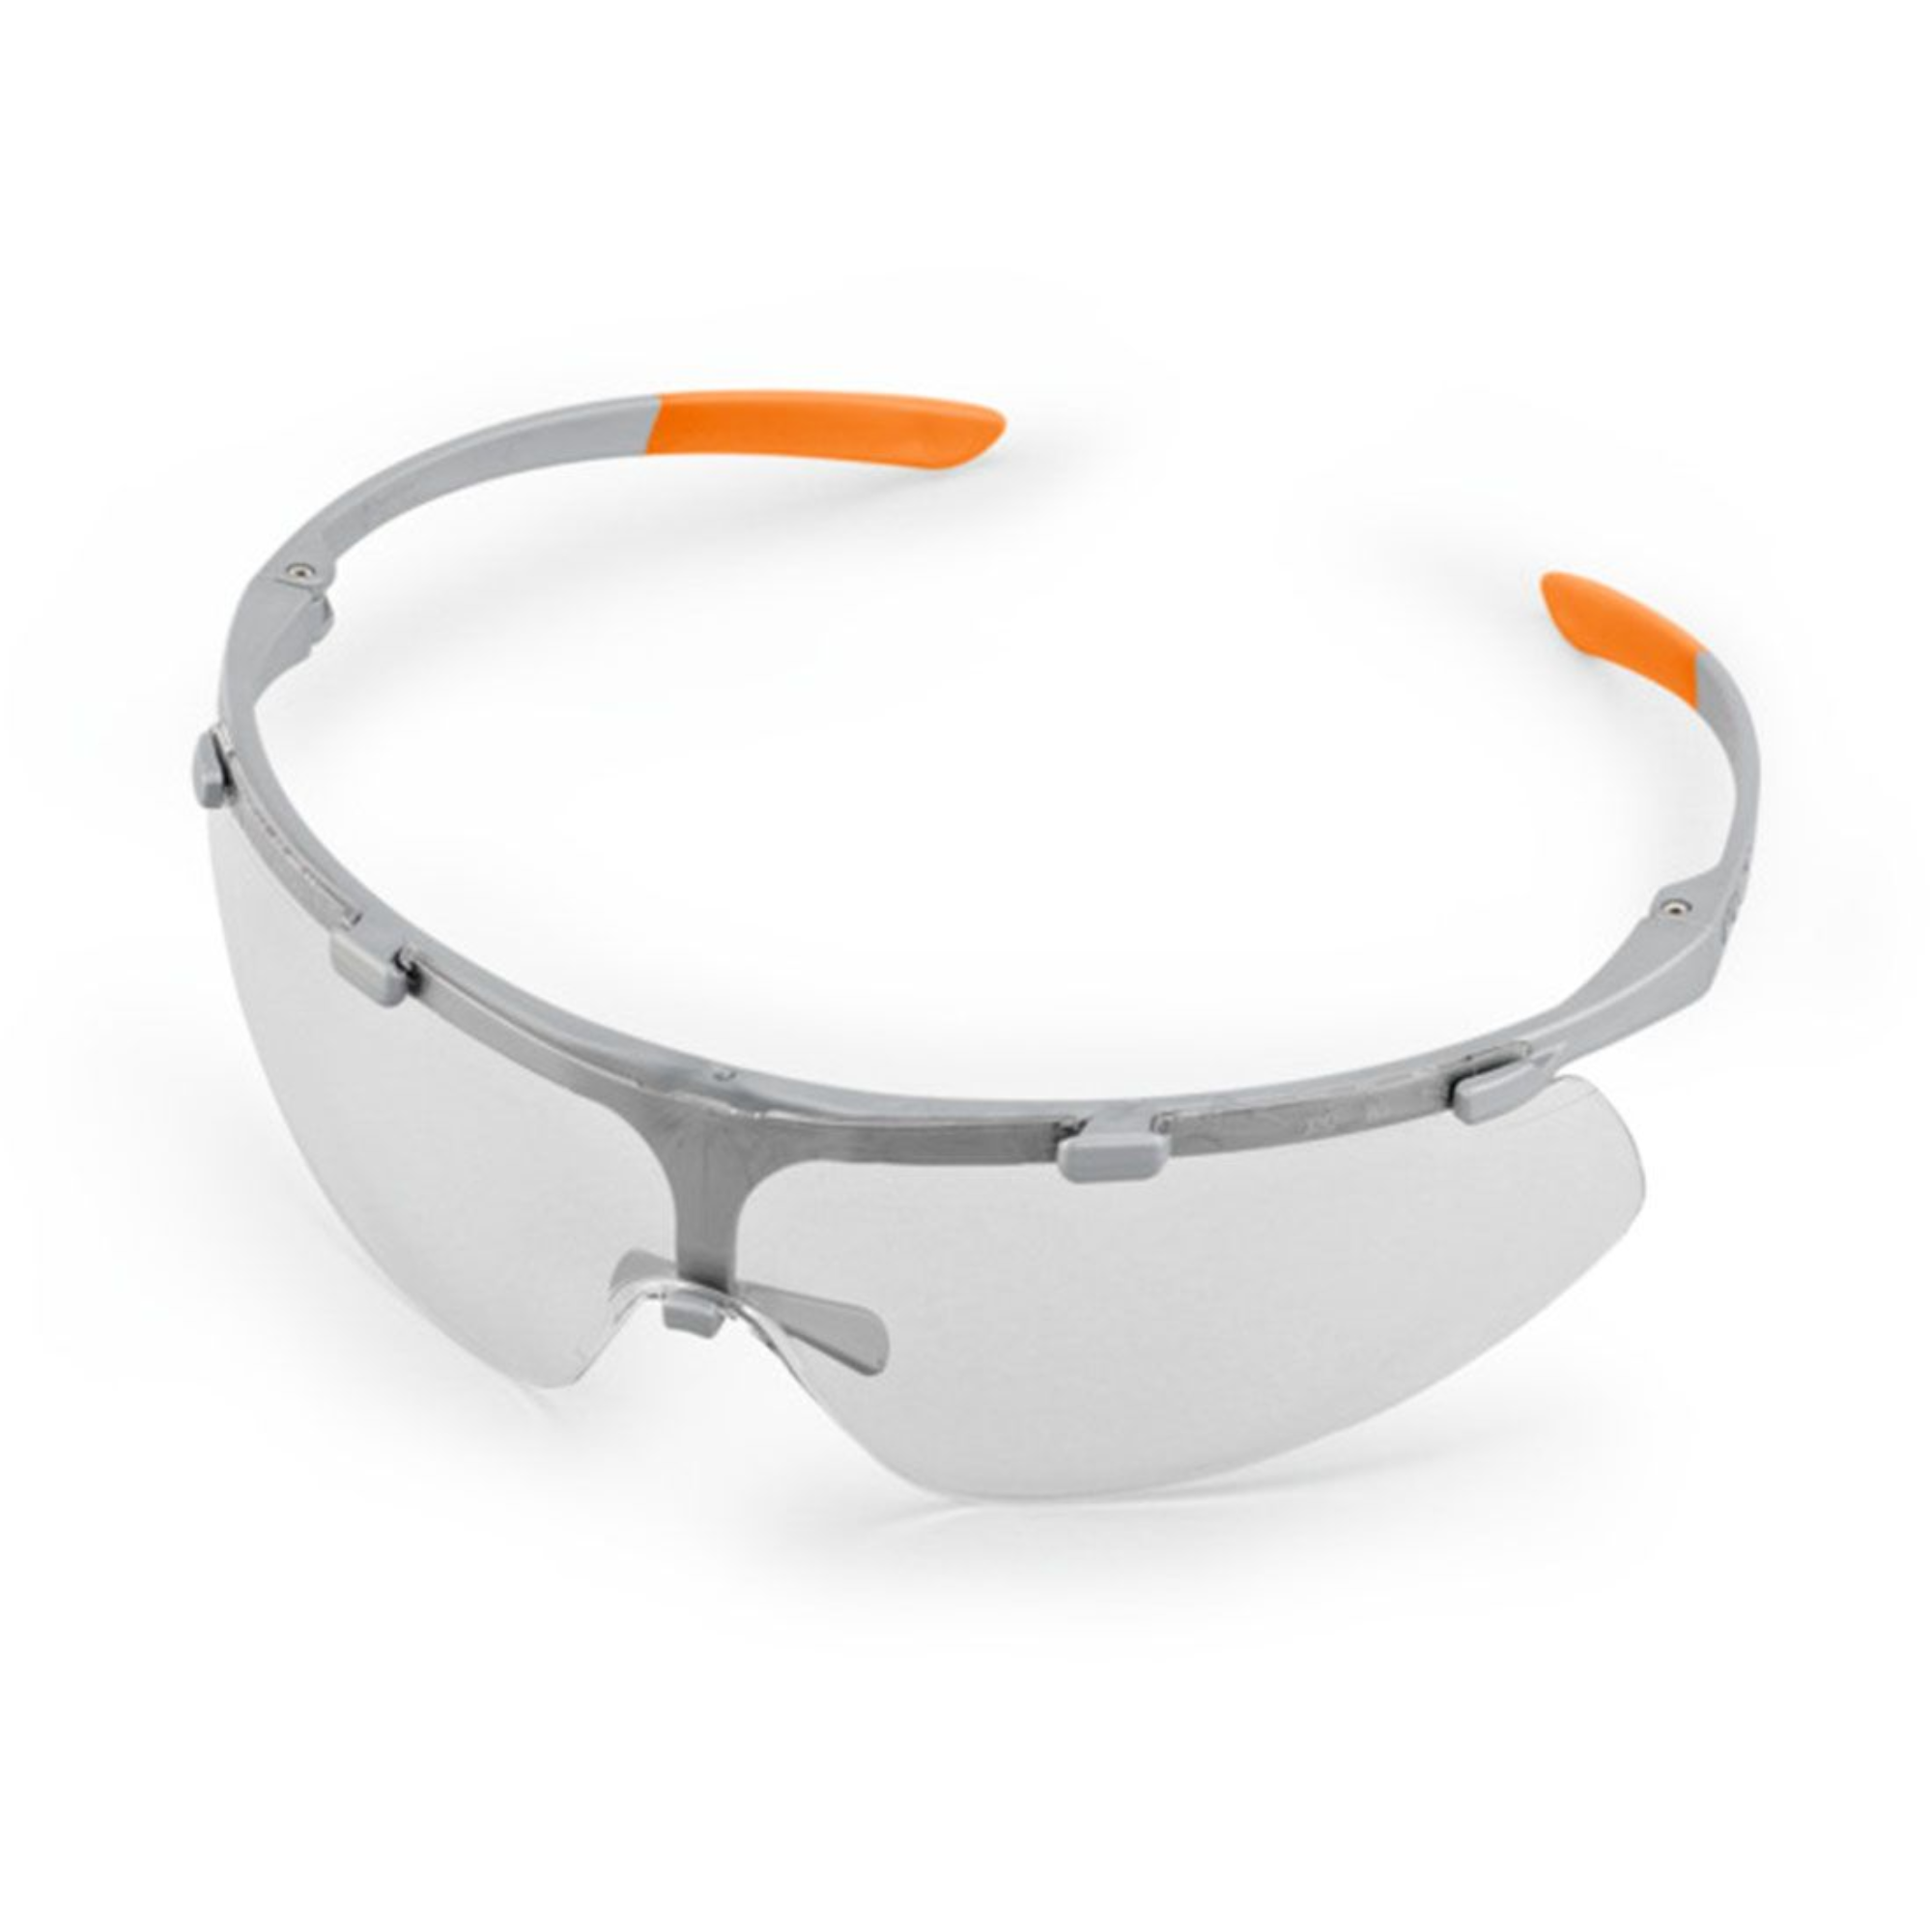 Stihl Advance Super Fit Safety Glasses | Gray/Orange | Clear Lens | 0000 884 0375